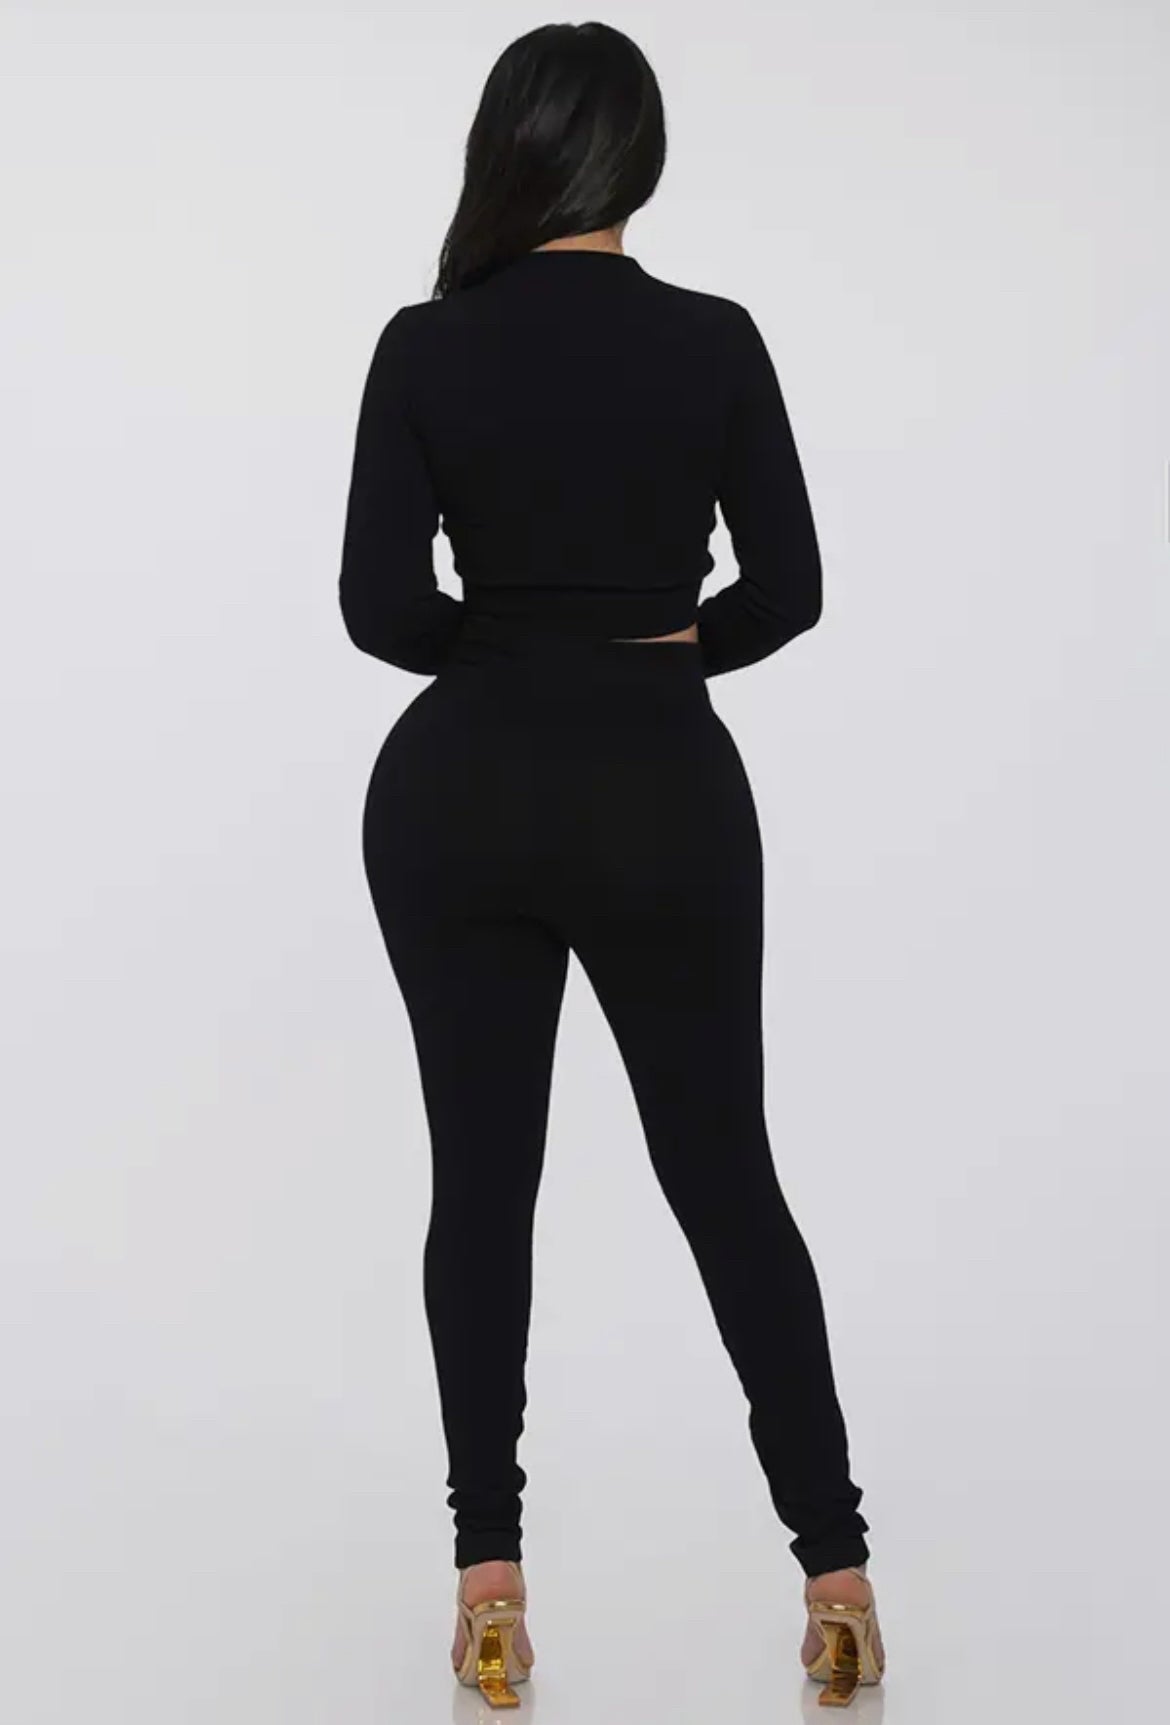 Delight Size L/XL Black Athletic wear